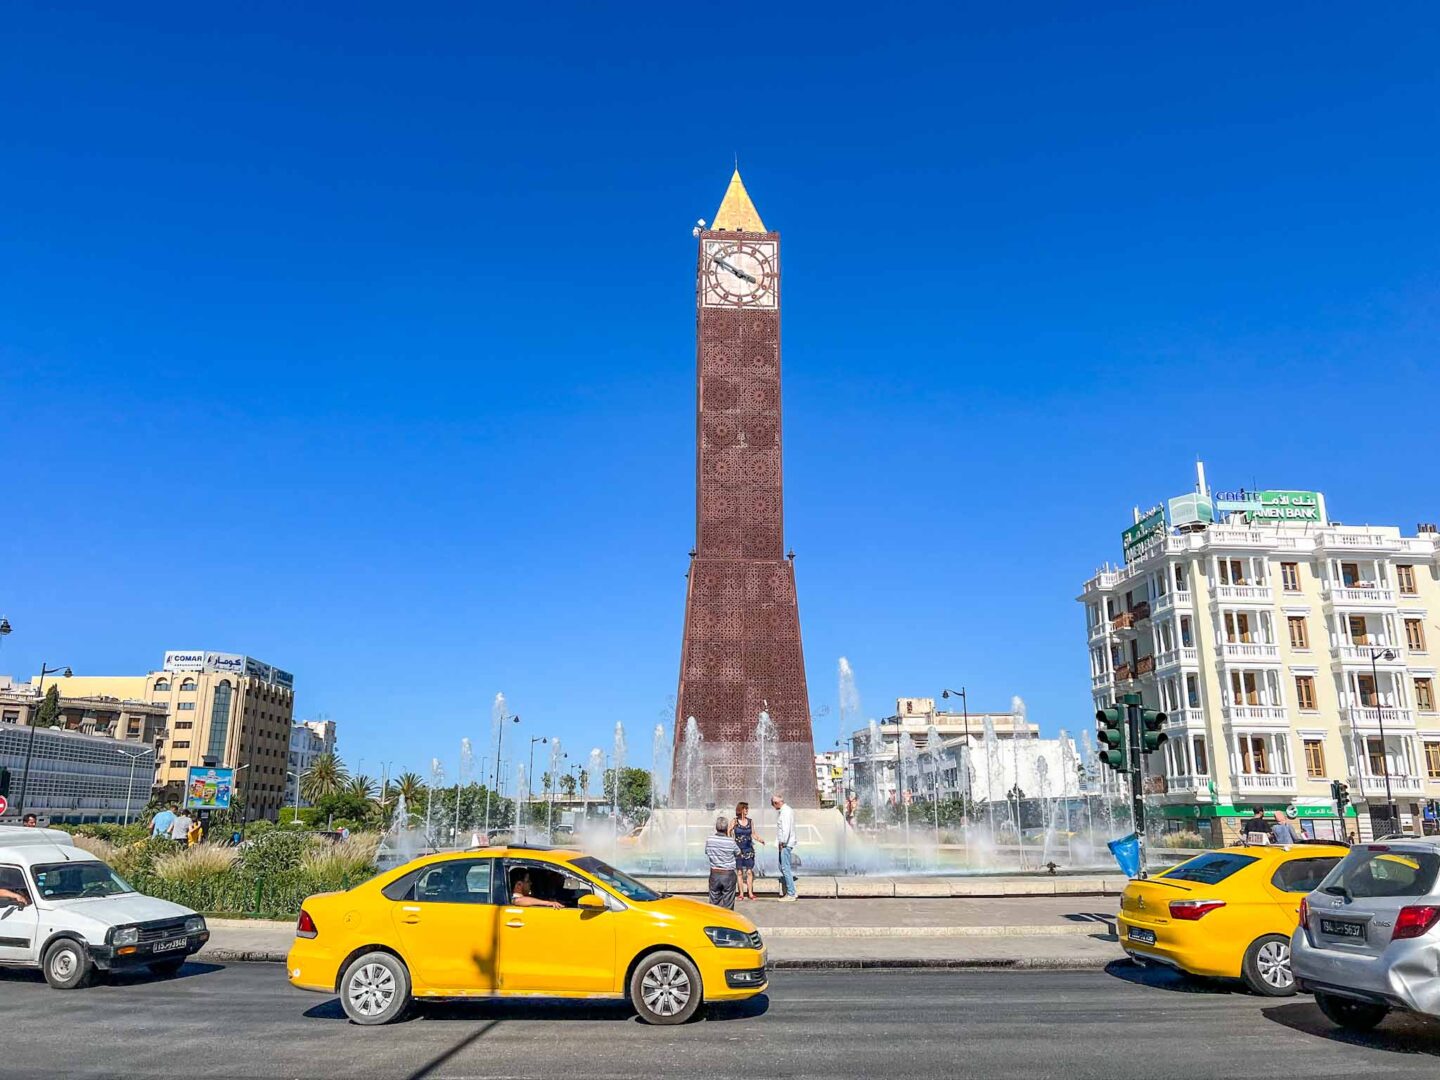 Tunisia itinerary, 3 days in Tunisia, taxi at Tunis clocktower